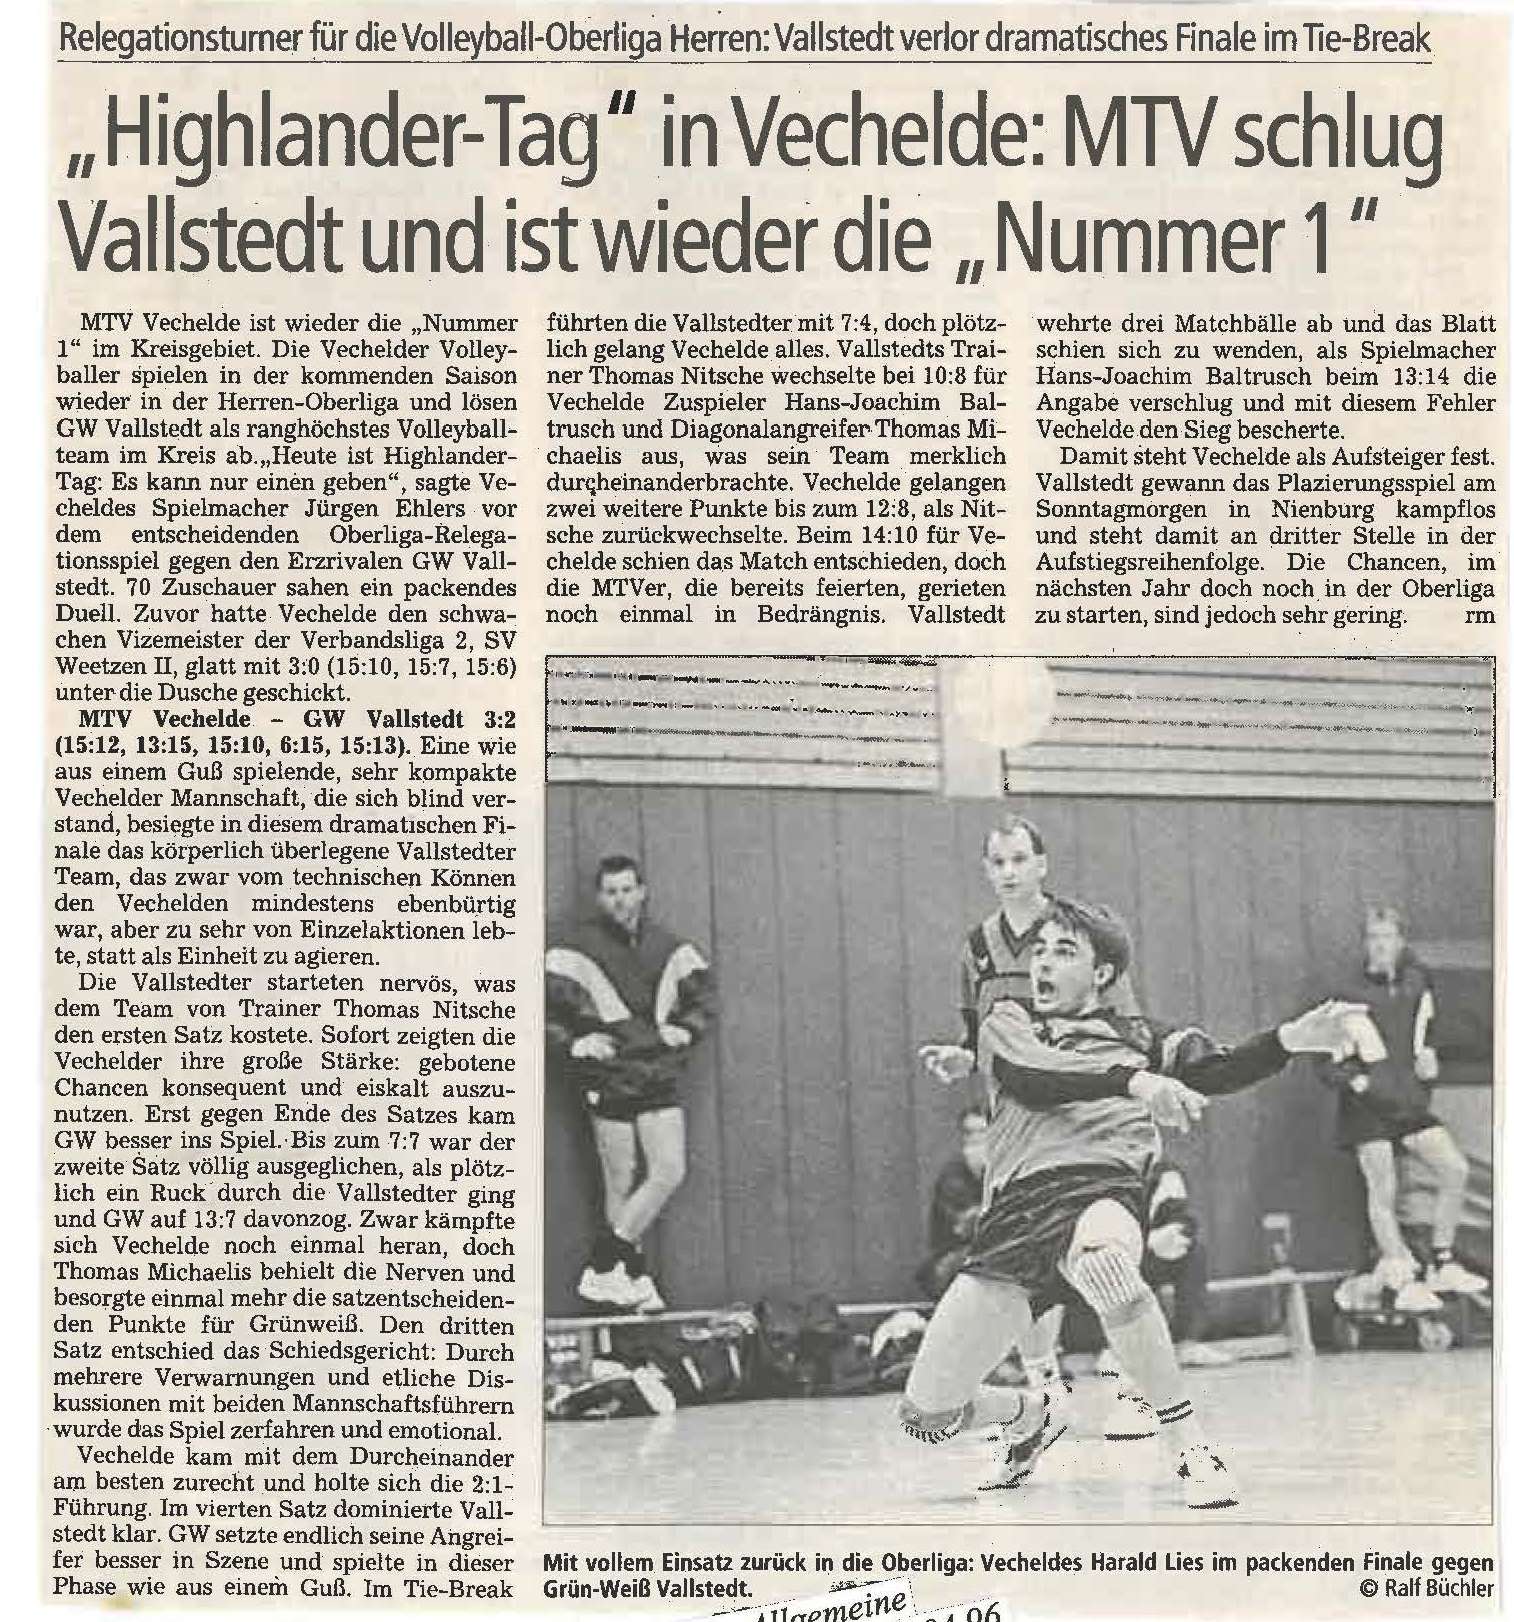 22.04.1996 Relegation Oberliga 1. Herren